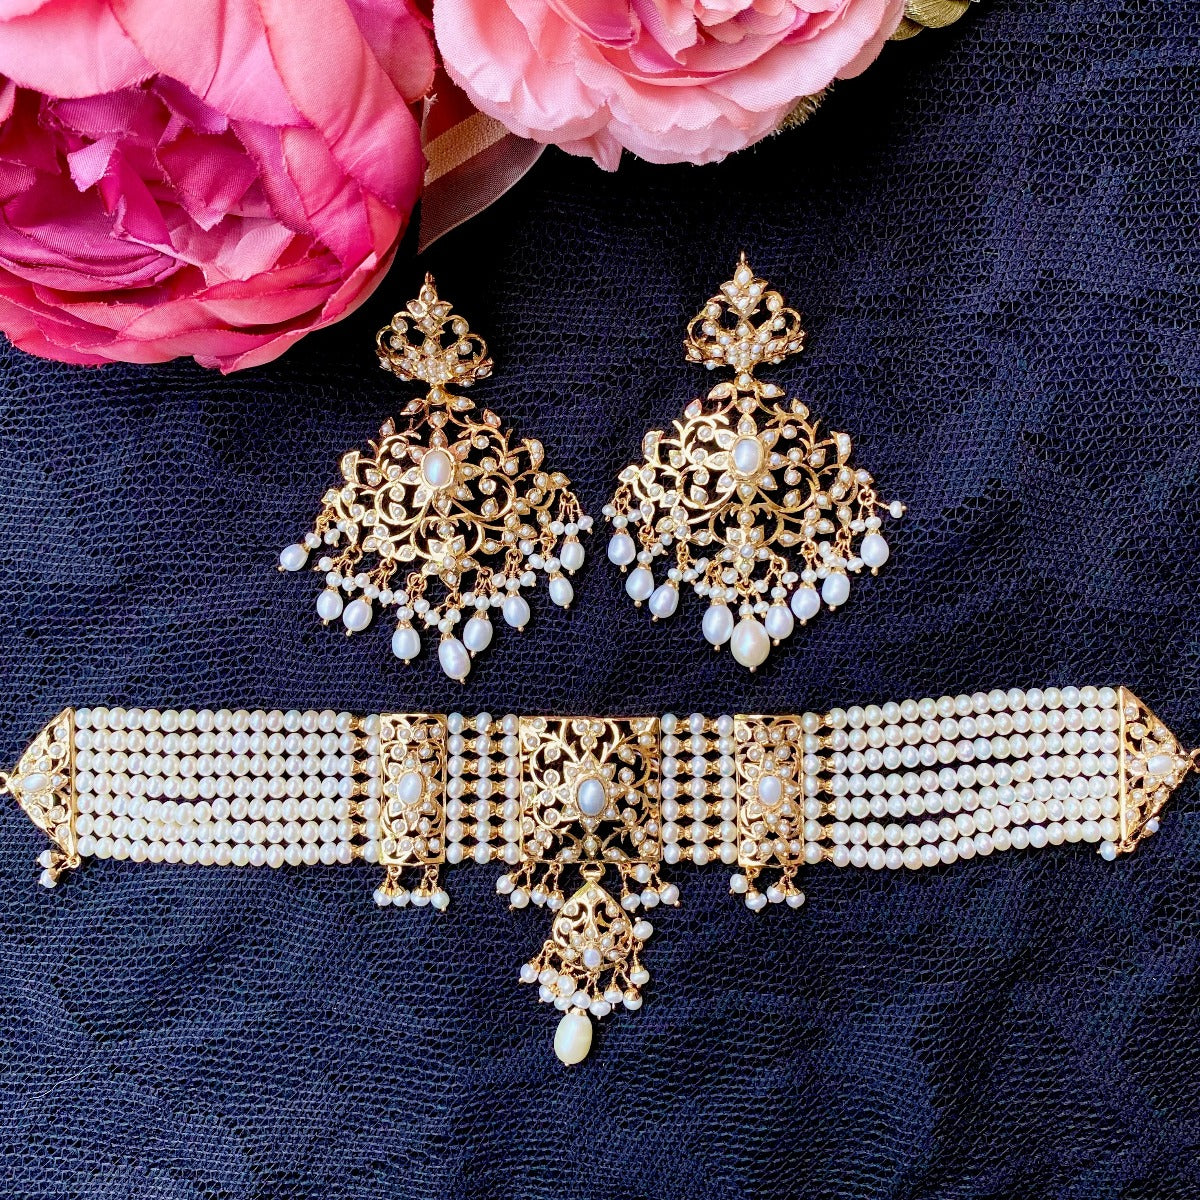 jewelry designs for destination wedding